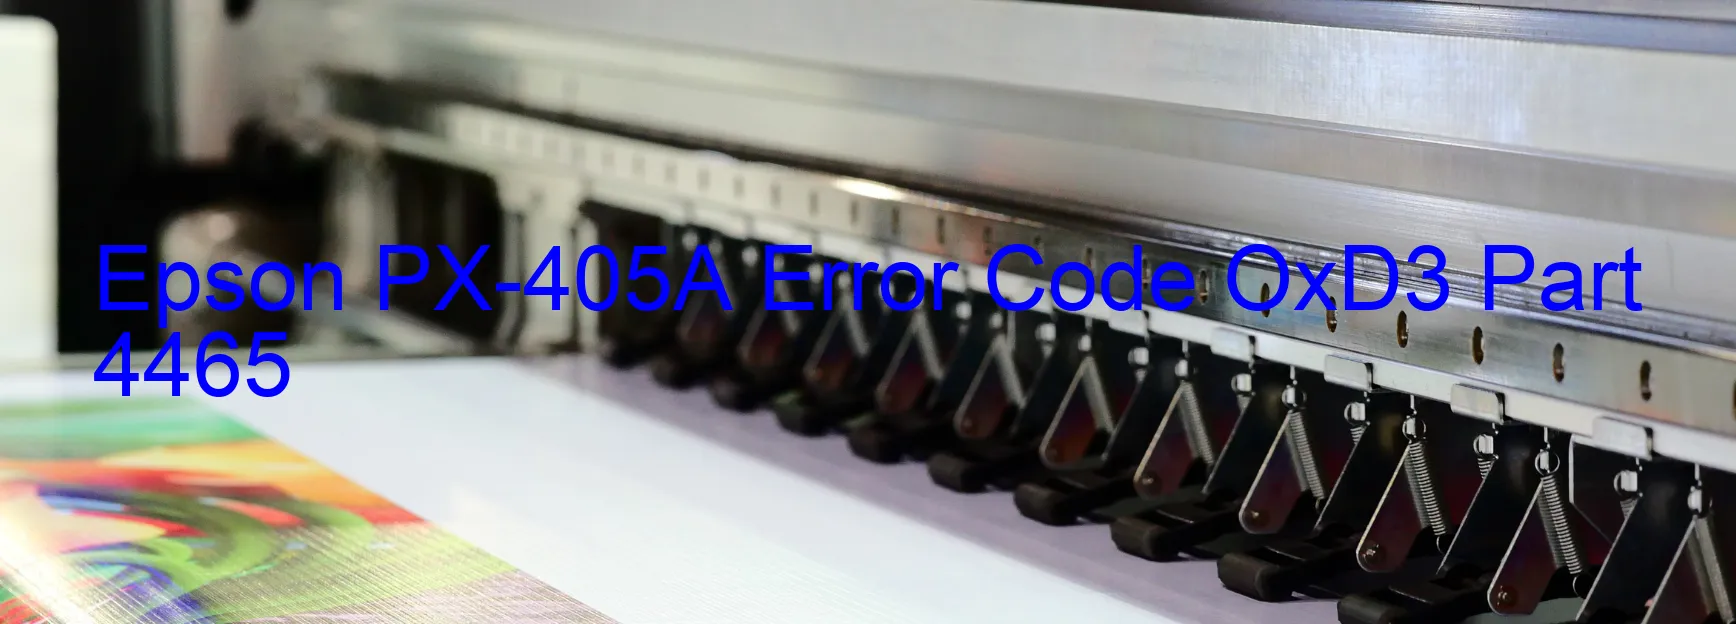 Epson PX-405A Error Code OxD3 Part 4465